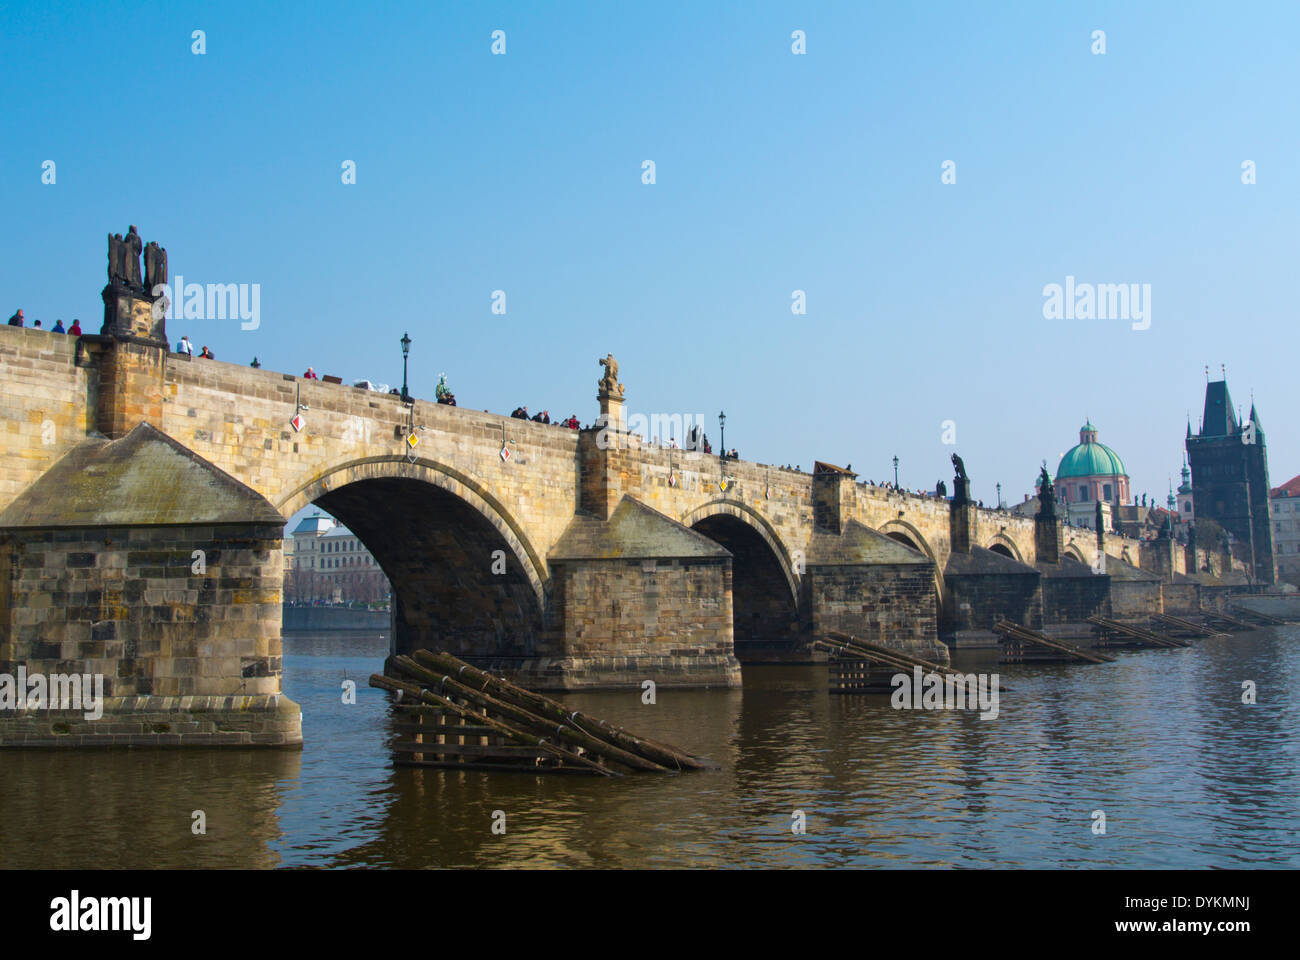 Karluv most, Charles Bridge, seen from Kampa island, Mala strana, Prague, Czech Republic, Europe Stock Photo